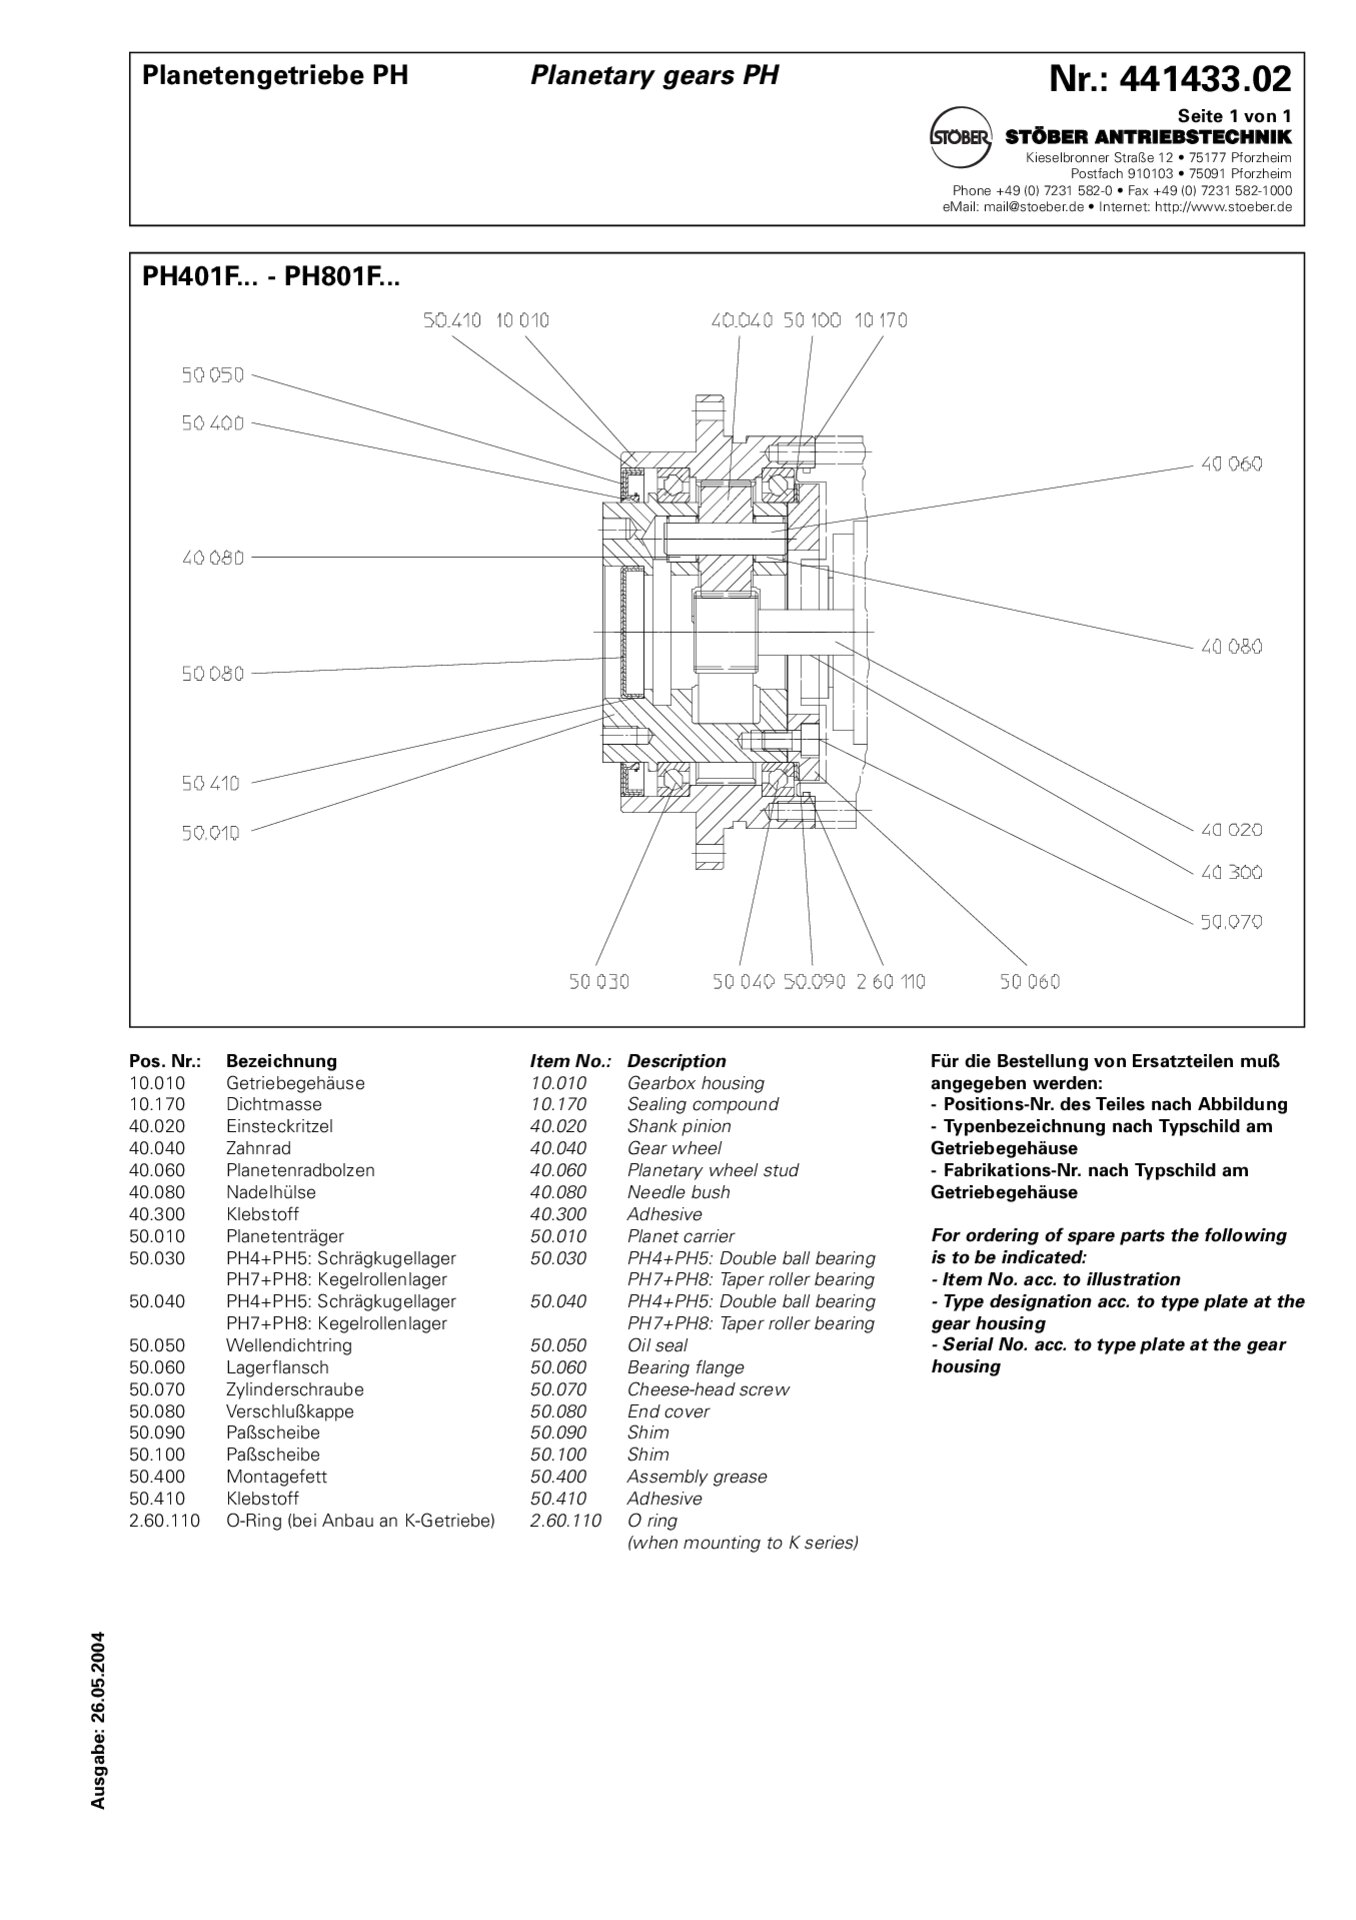 Spare parts list PH401/PH501/PH701/PH801